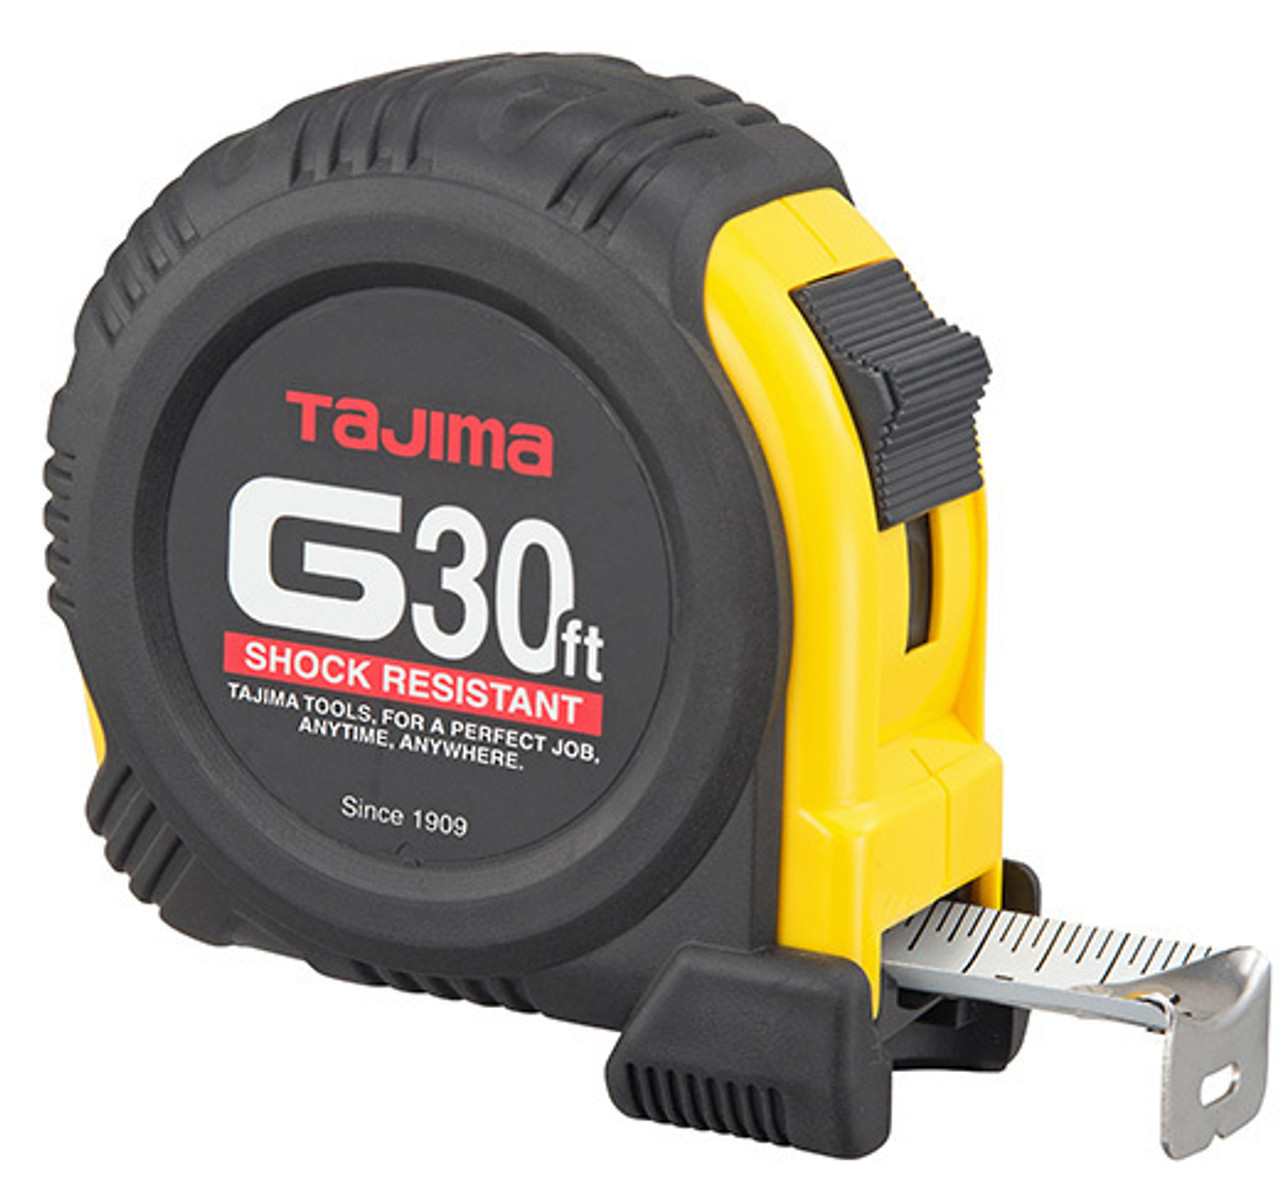 Tajima Shock Resistant Tape Measure